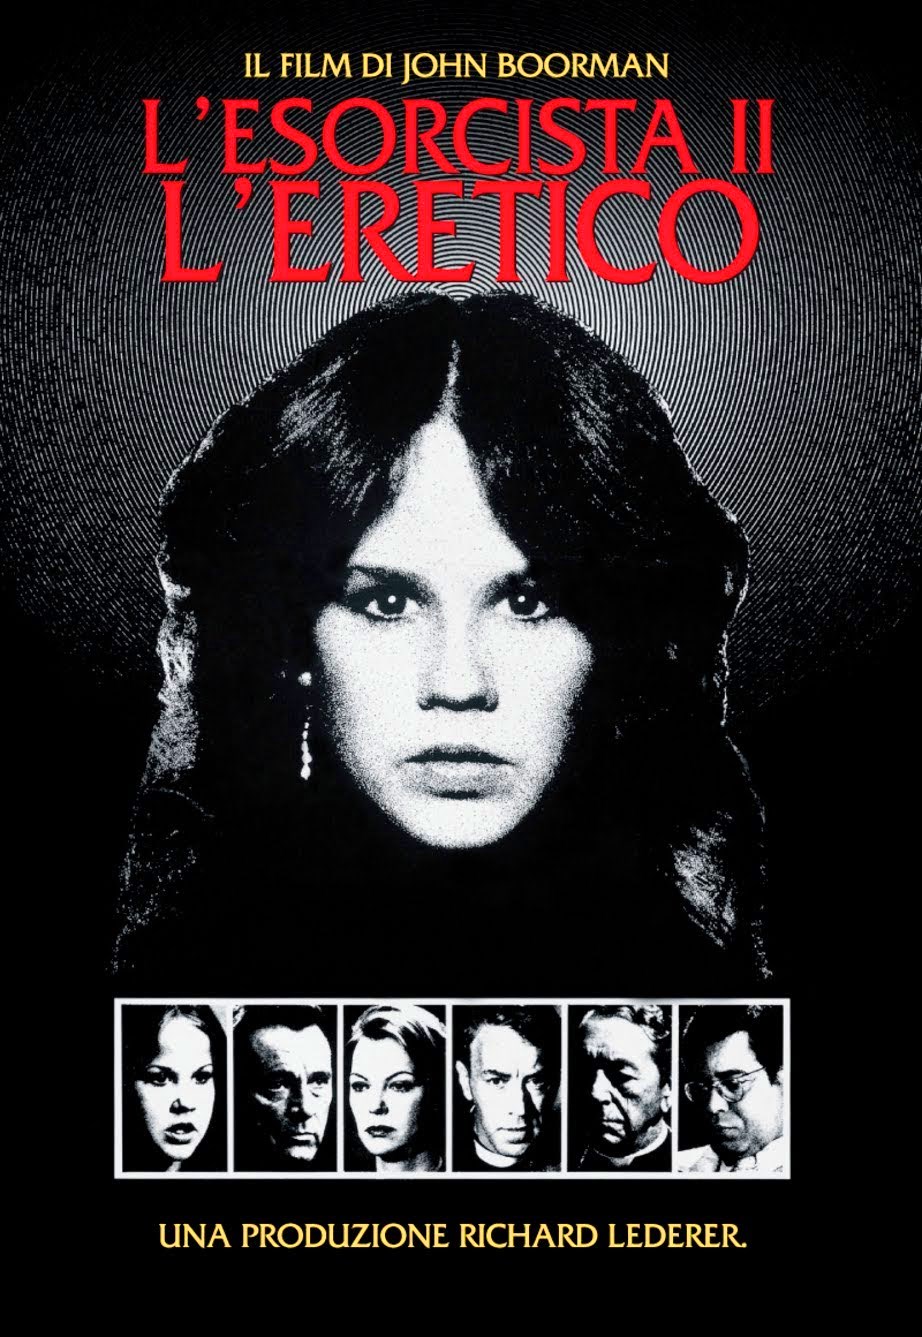 L’esorcista II – L’eretico [HD] (1977)